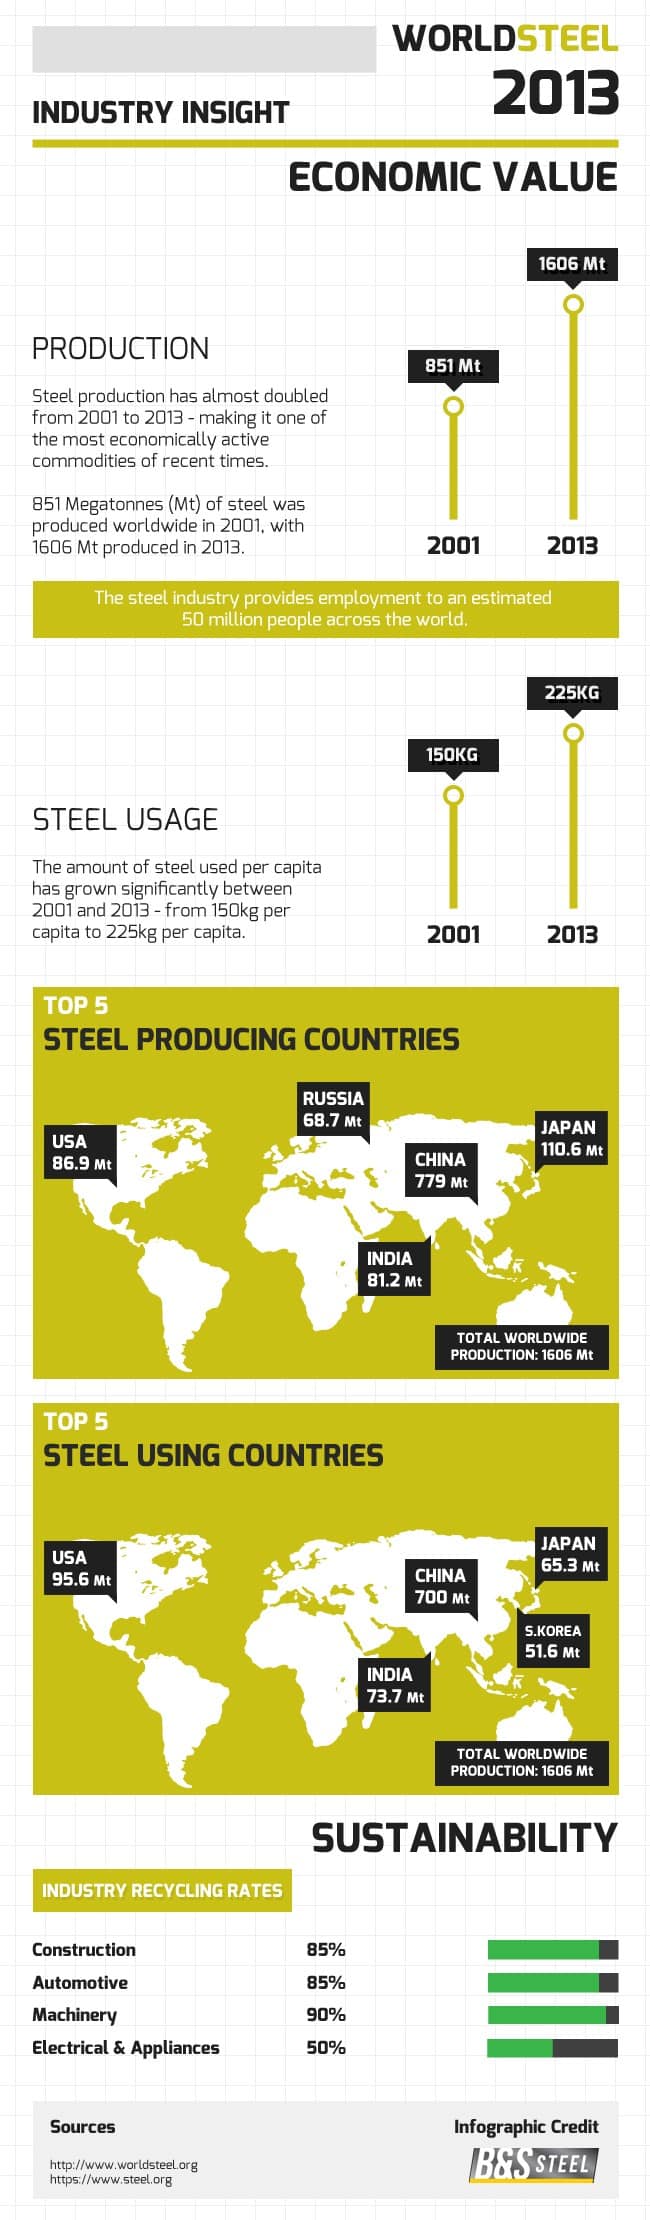 Steel Industry Insight